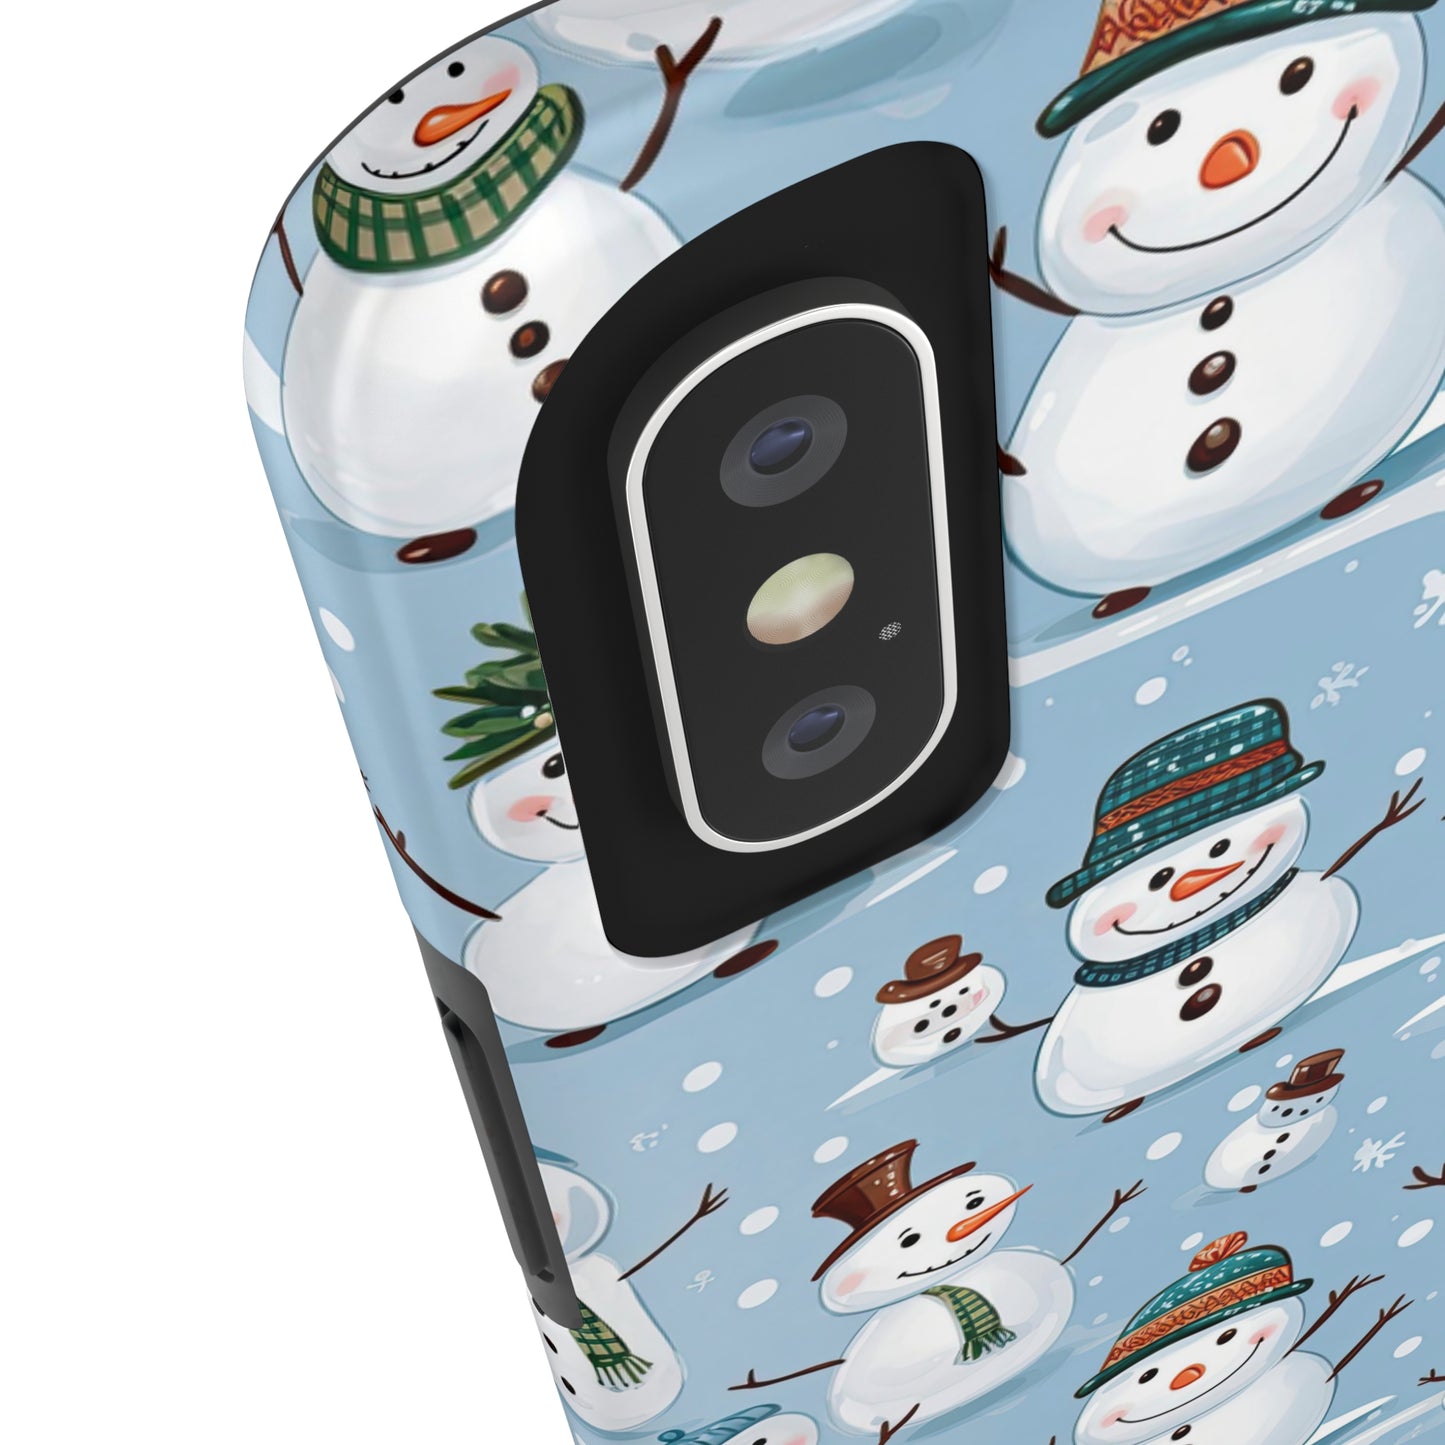 Christmas Snowman Phone Case